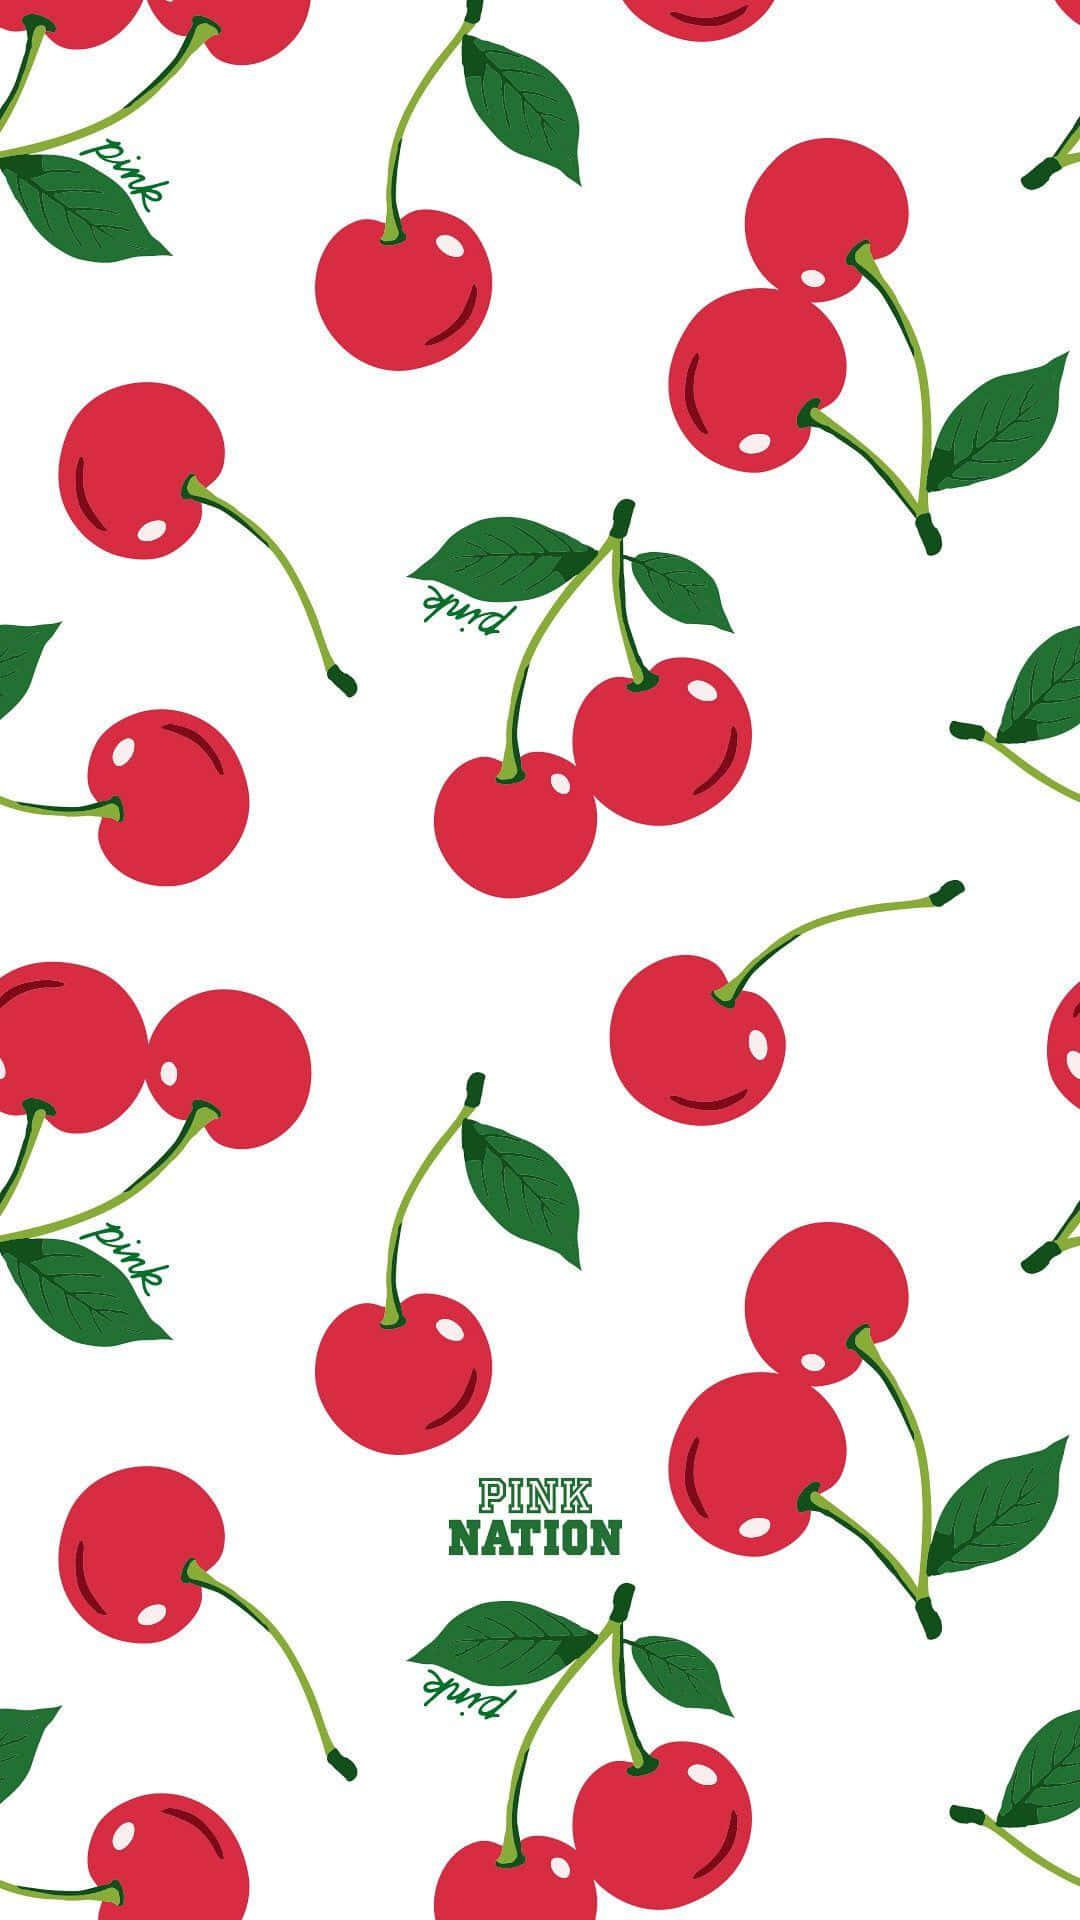 Cute Red Cherries Pink Nation Logo Wallpaper